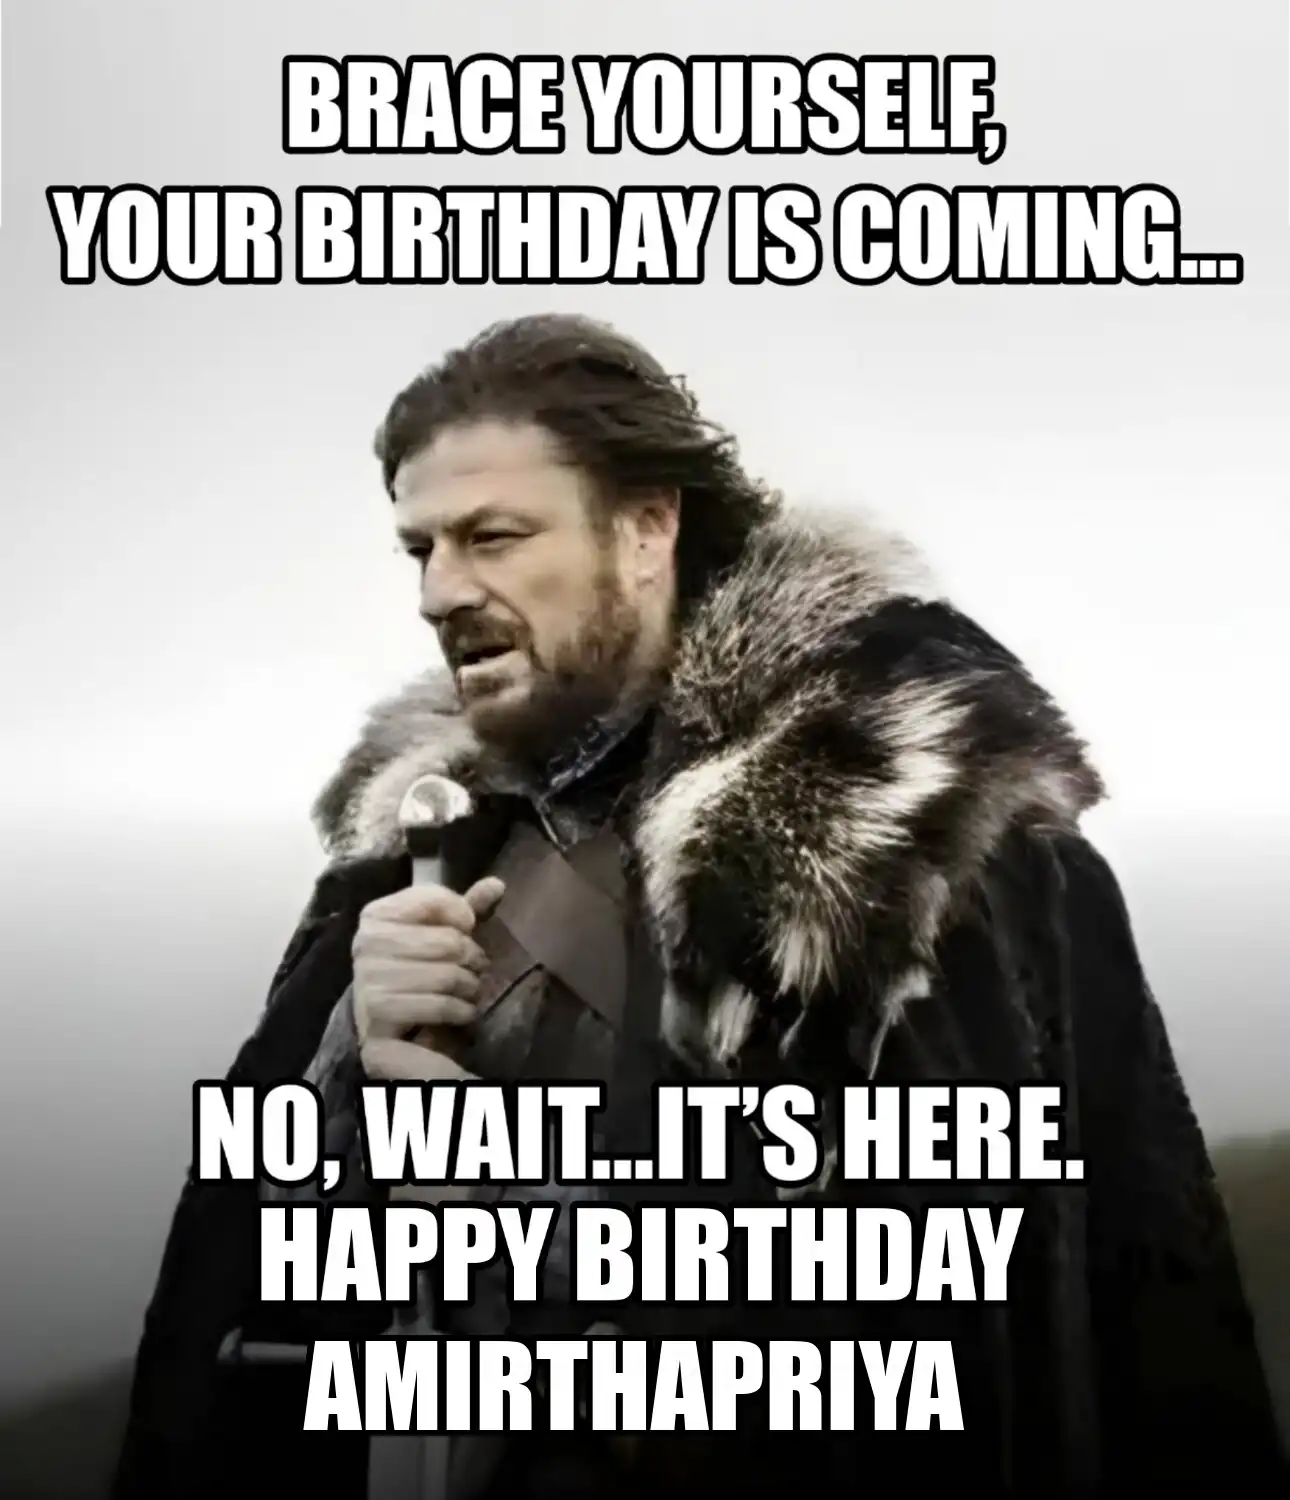 Happy Birthday Amirthapriya Brace Yourself Your Birthday Is Coming Meme